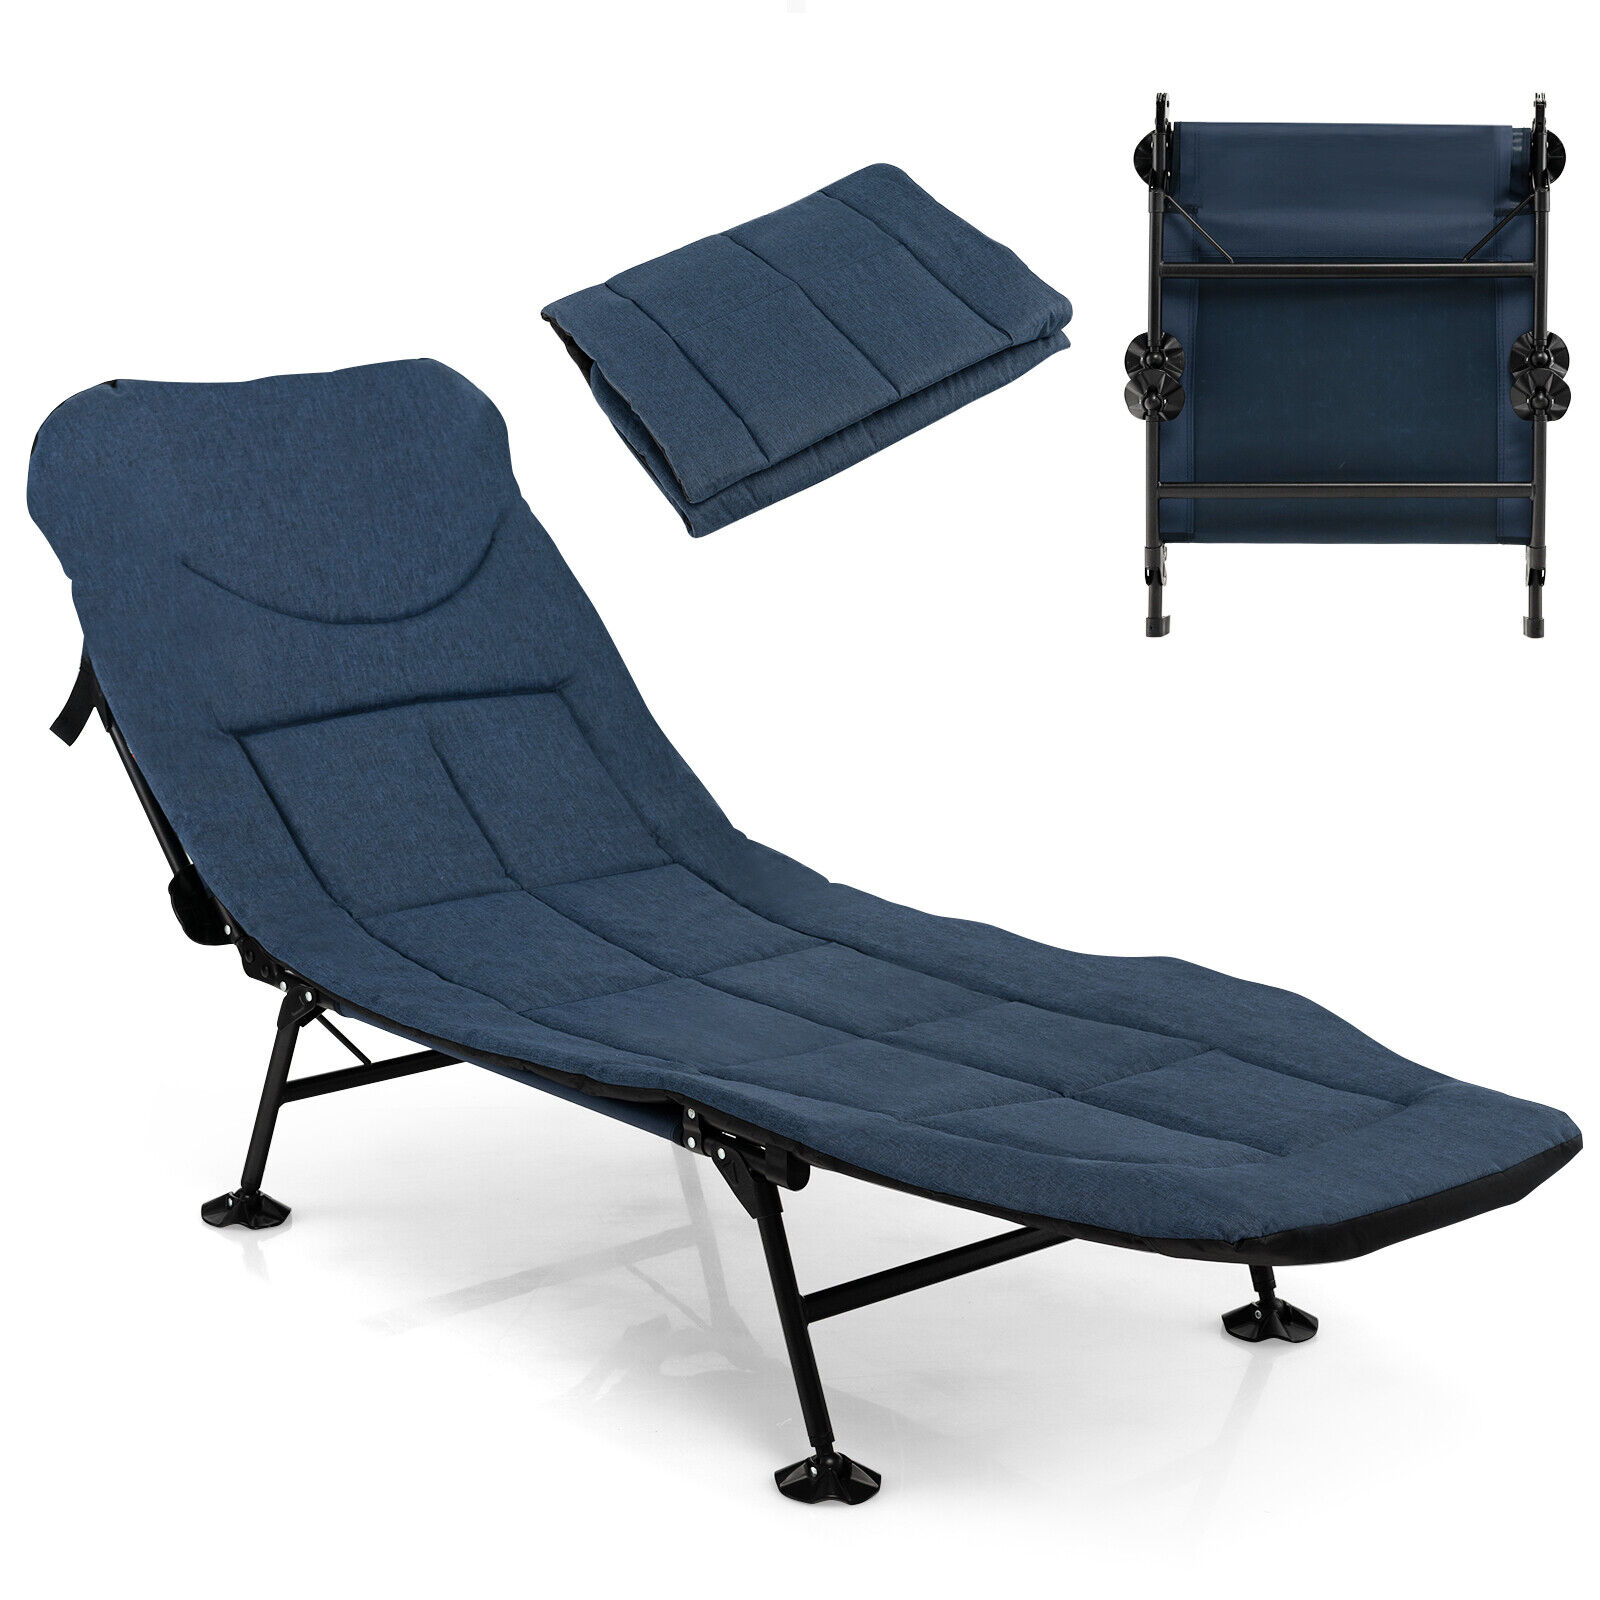 Goplus Folding Camping Cot W/ Detachable Mattress & 6-Position Adjustable Backrest Navy